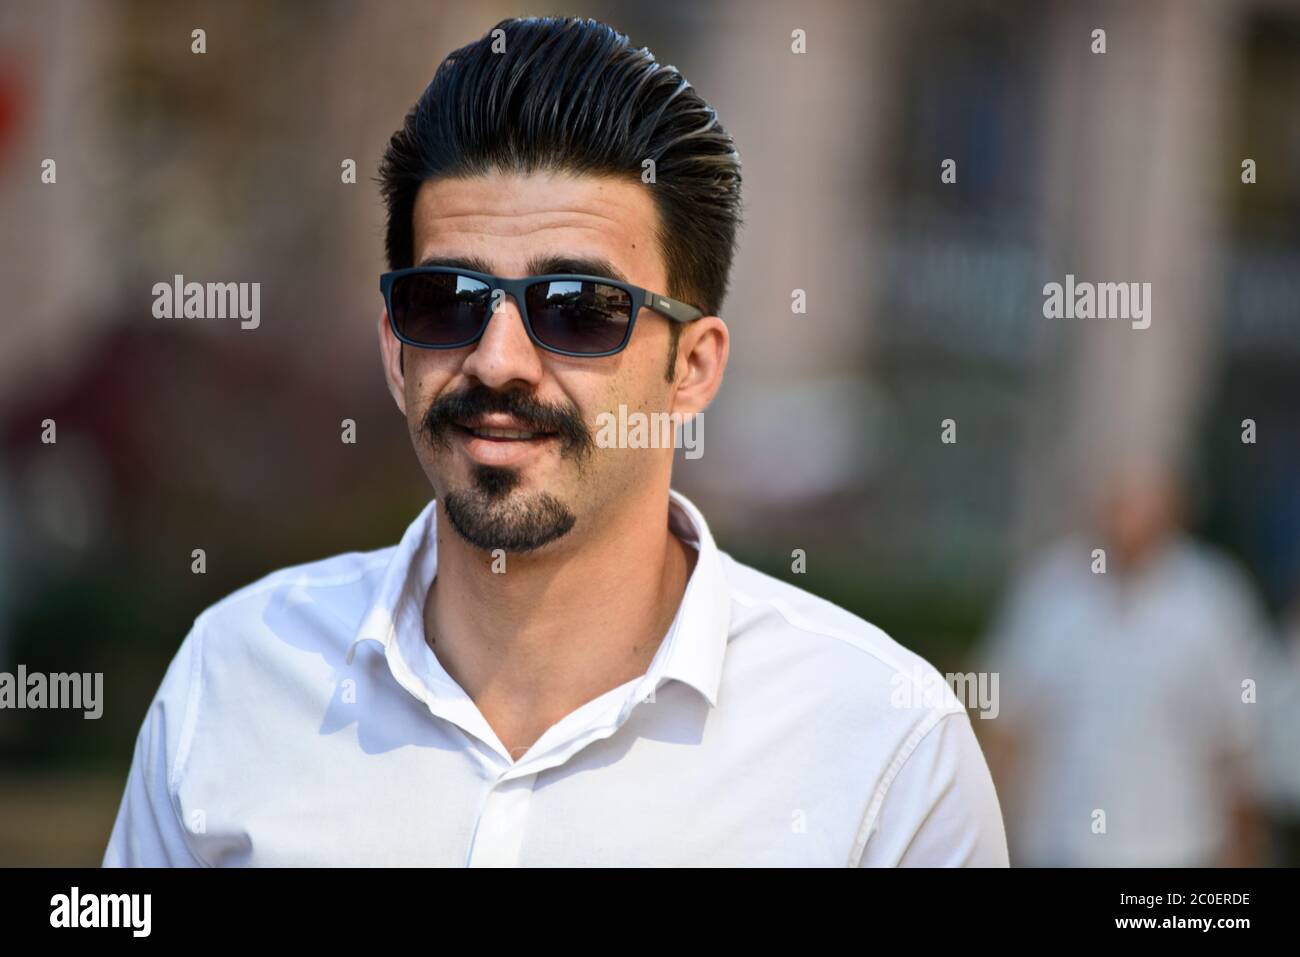 Armenian man wearing sunglasses in Northern Avenue, Yerevan, Armenia Stock Photo